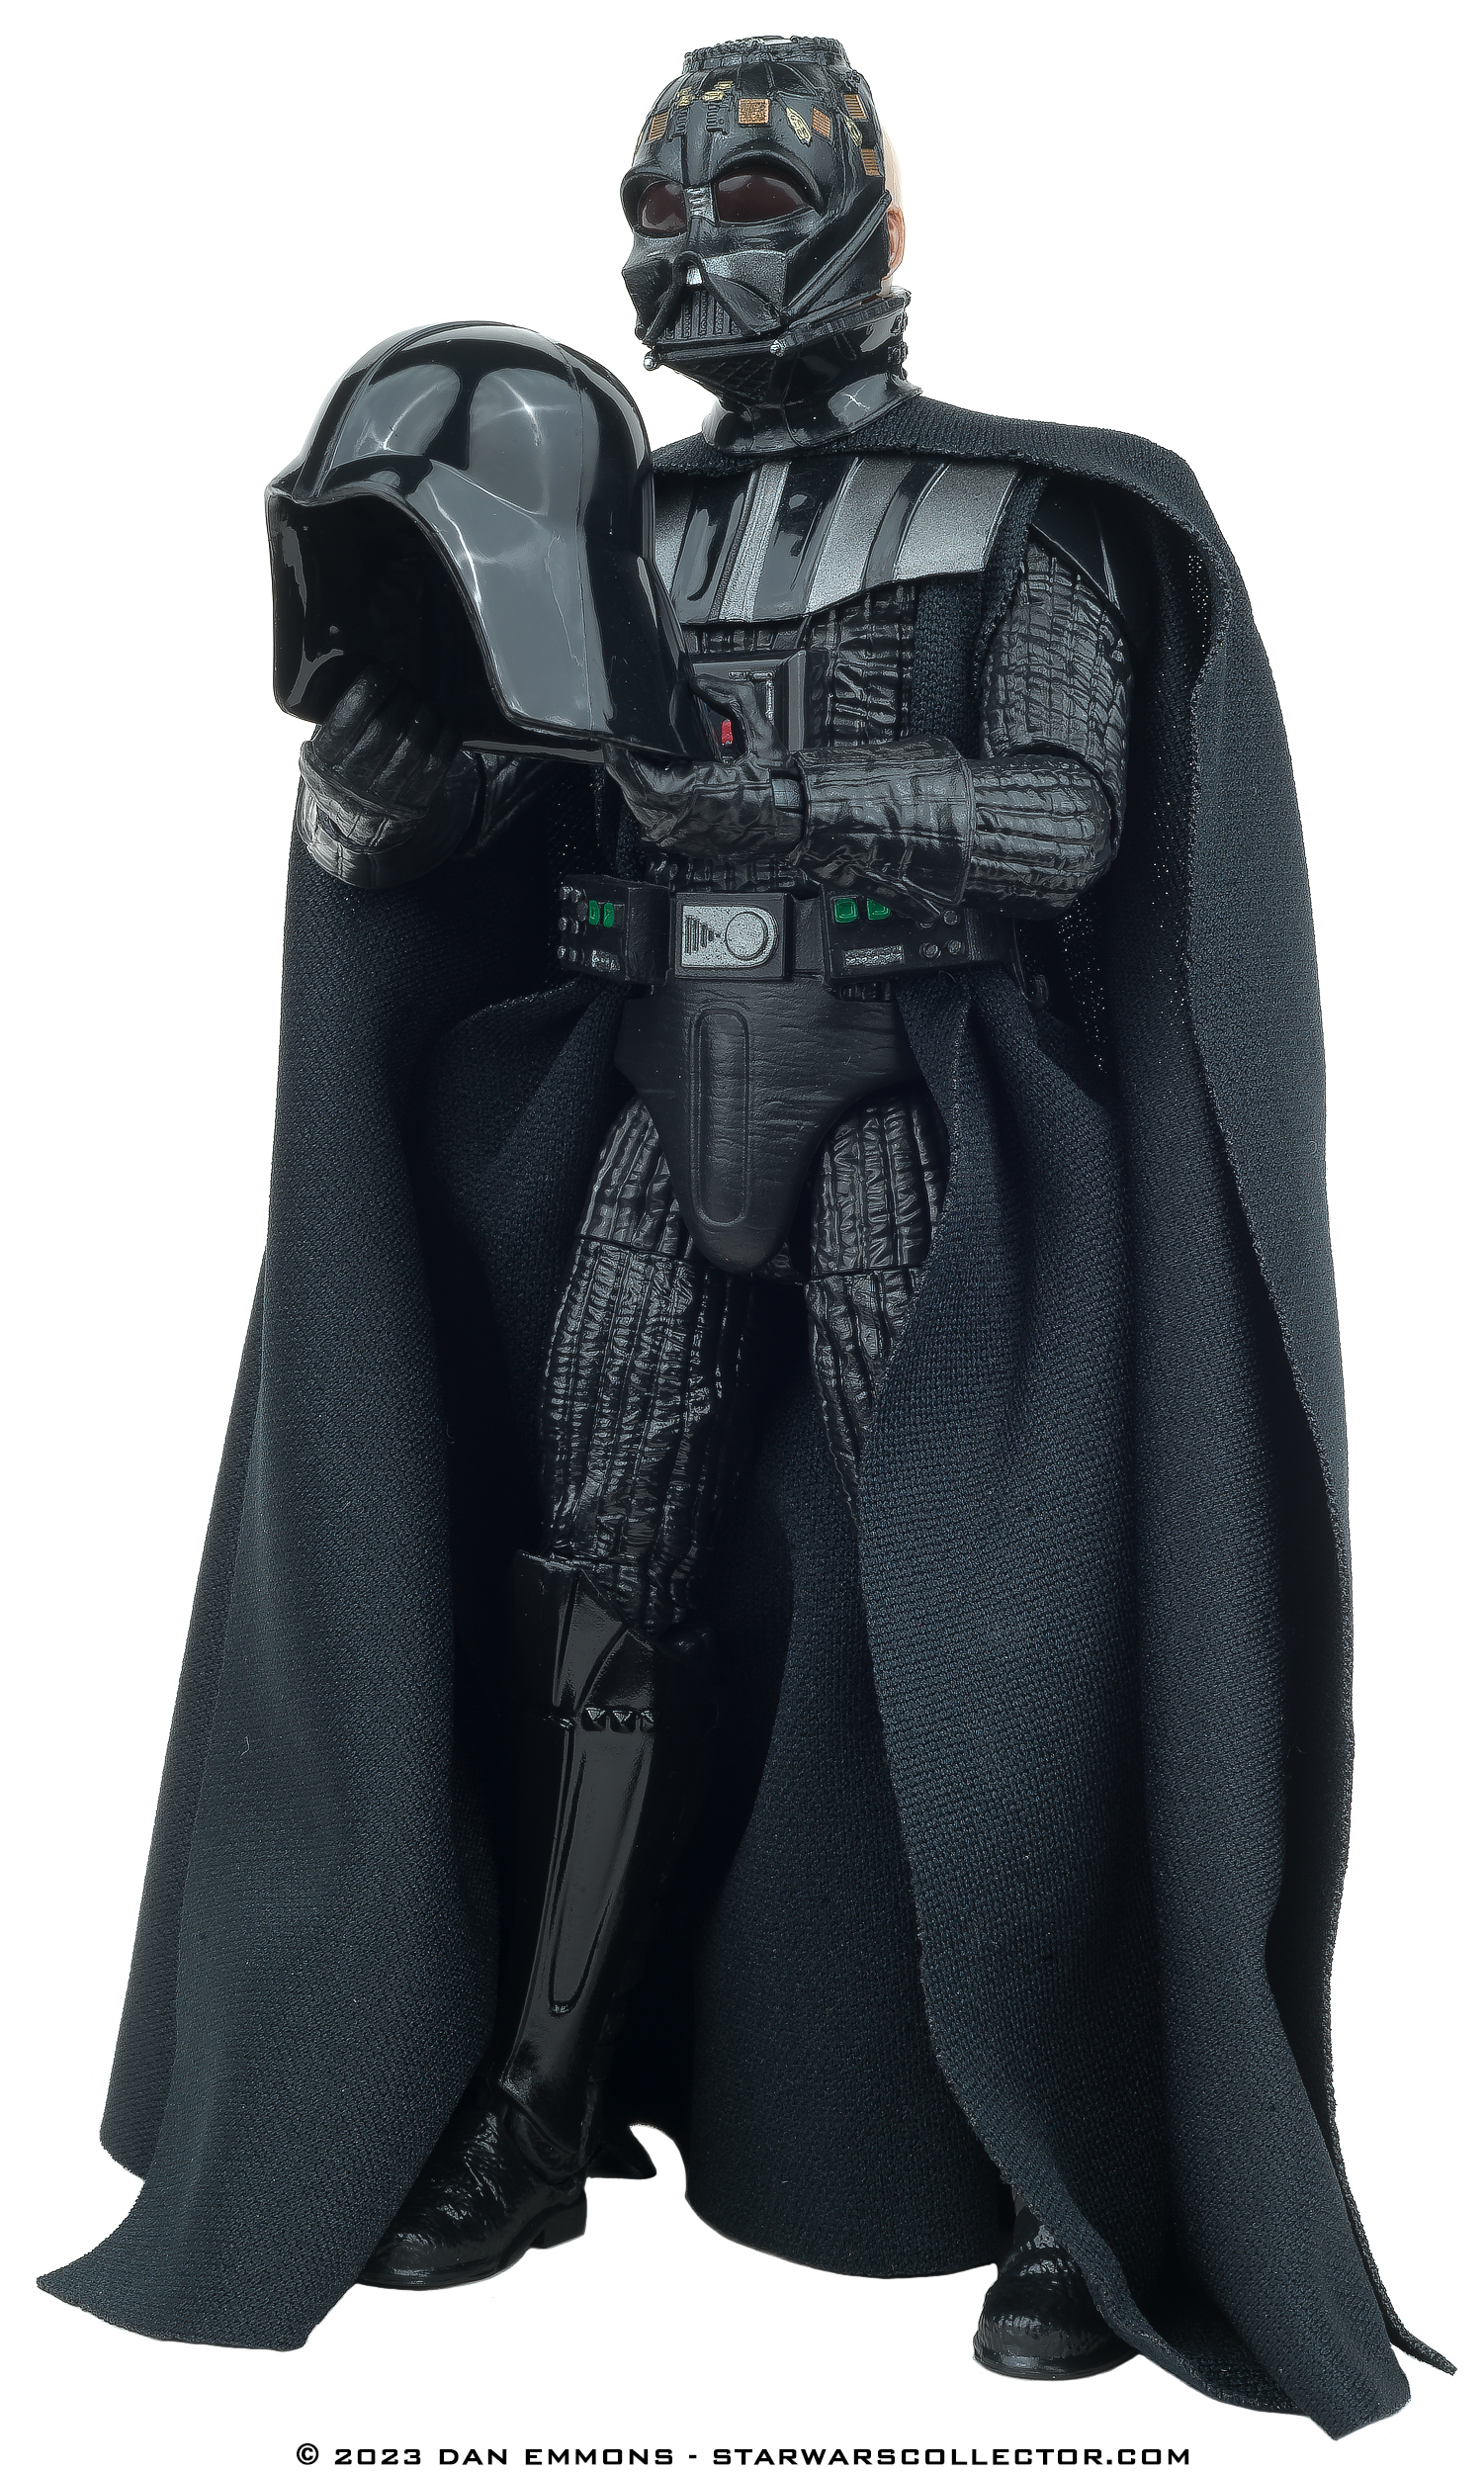 The Black Series 40th Anniversary 6-Inch Darth Vader